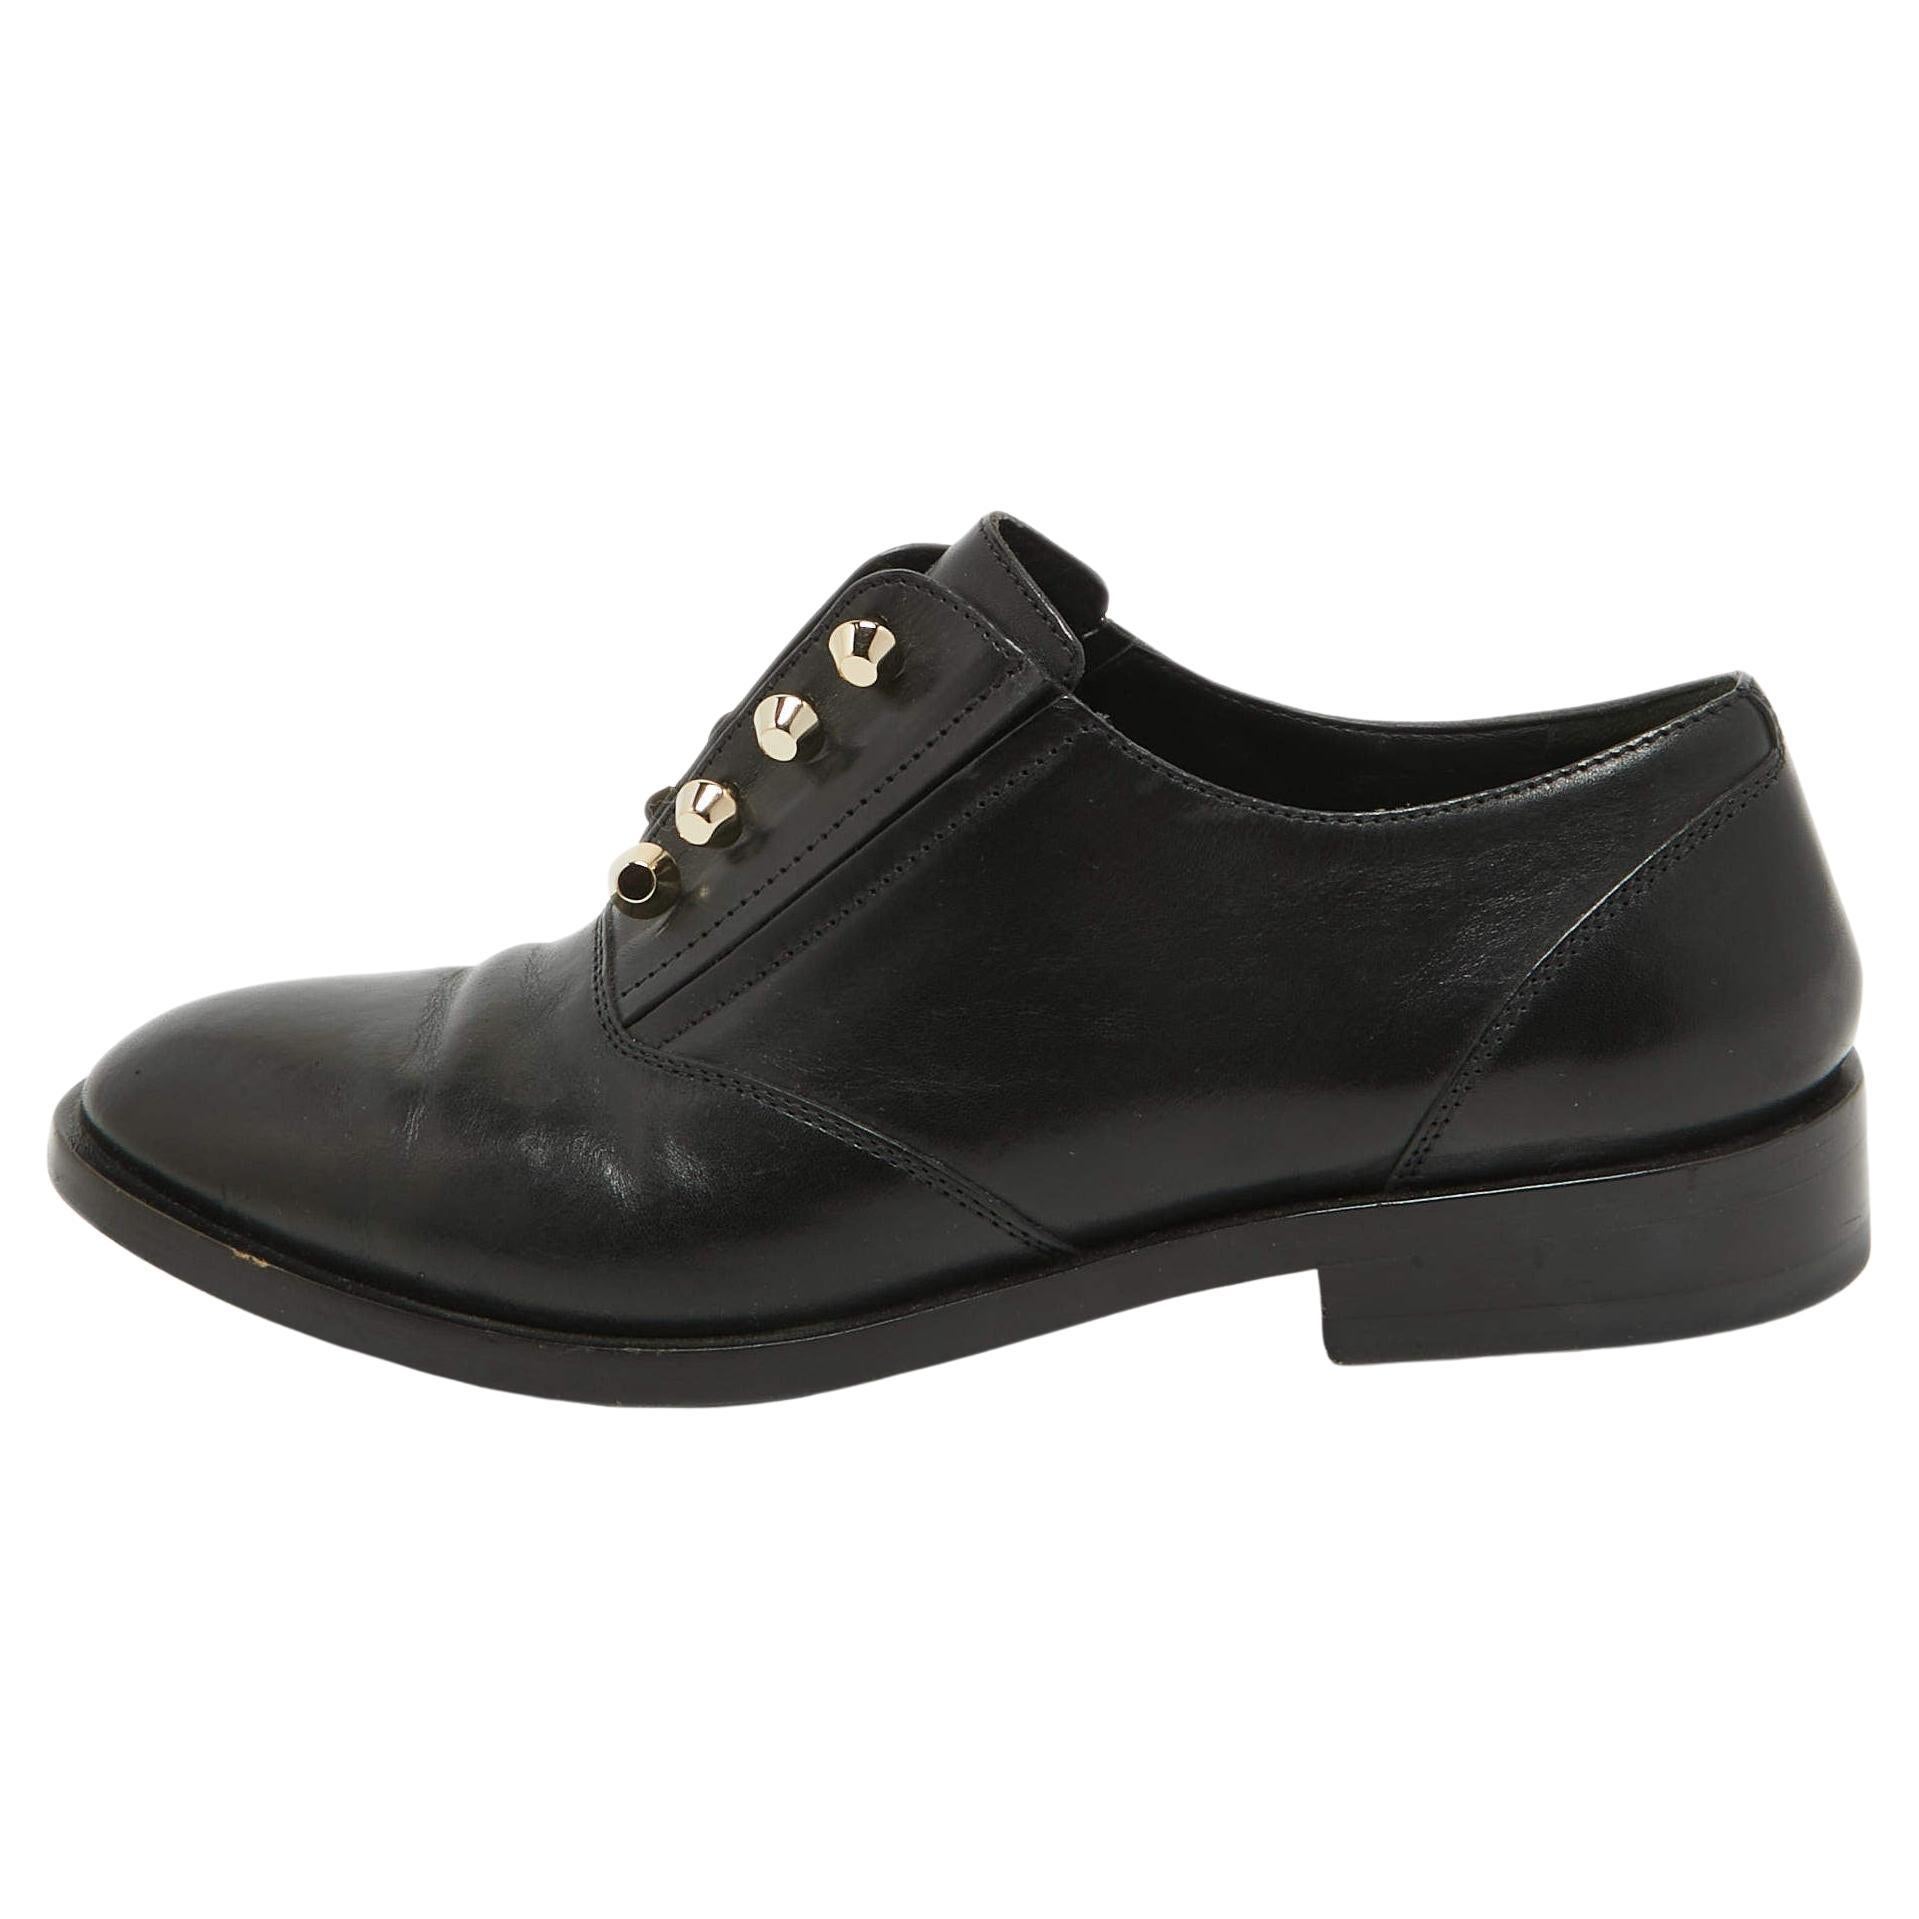 Balenciaga Black Leather Slip On Oxfords Size 39.5 For Sale